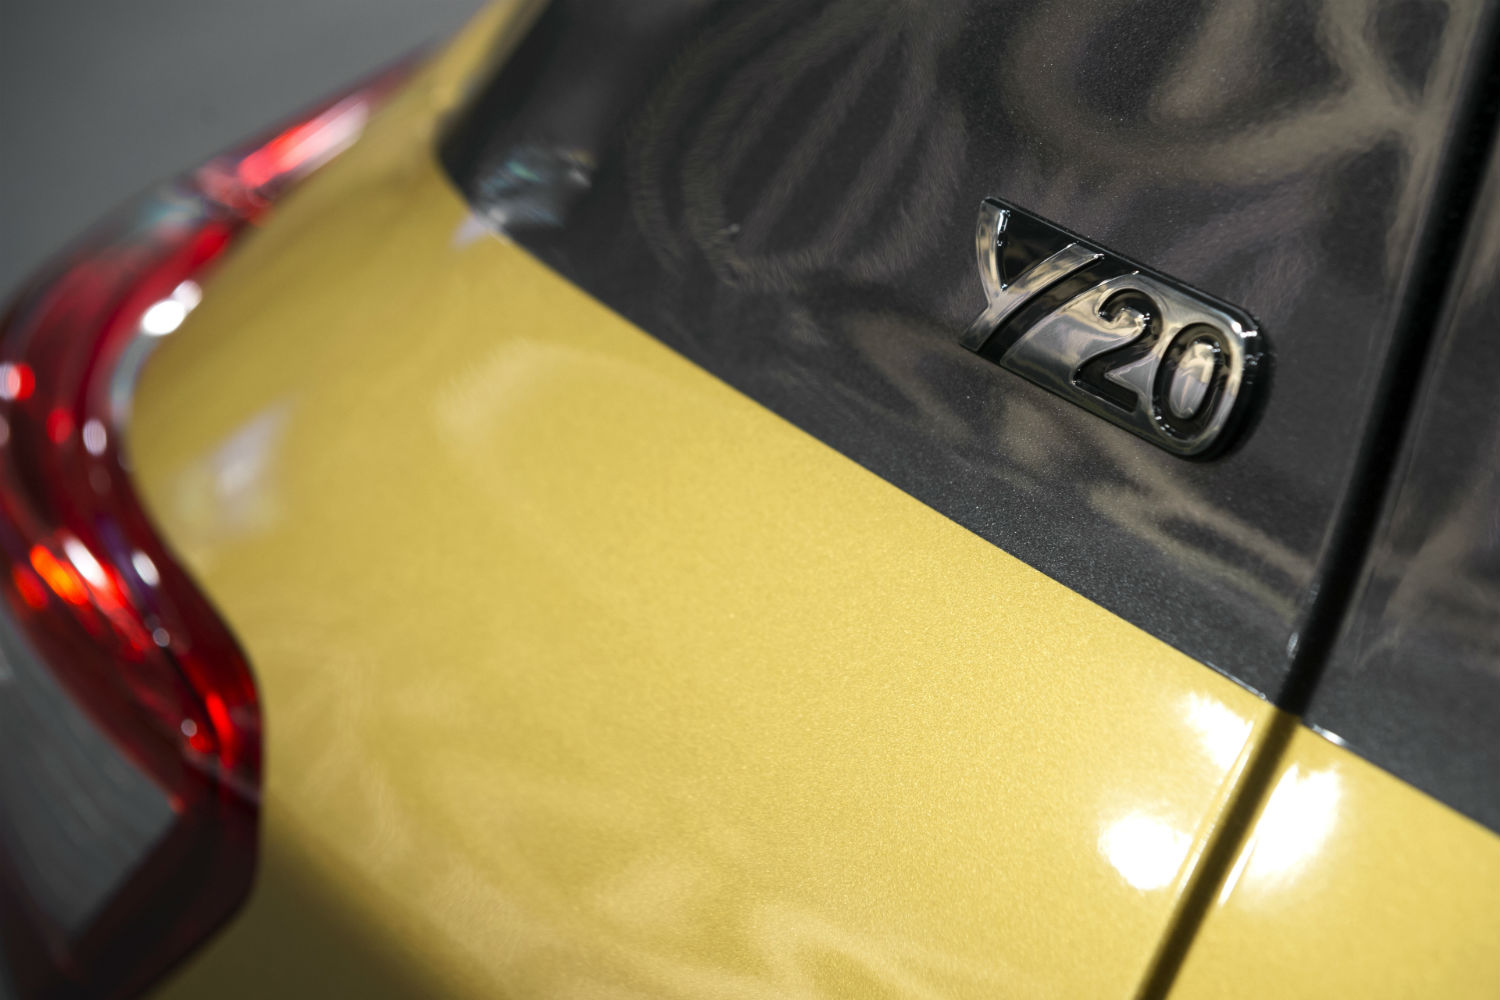 Toyota Yaris 20 Aniversario Limited Edition